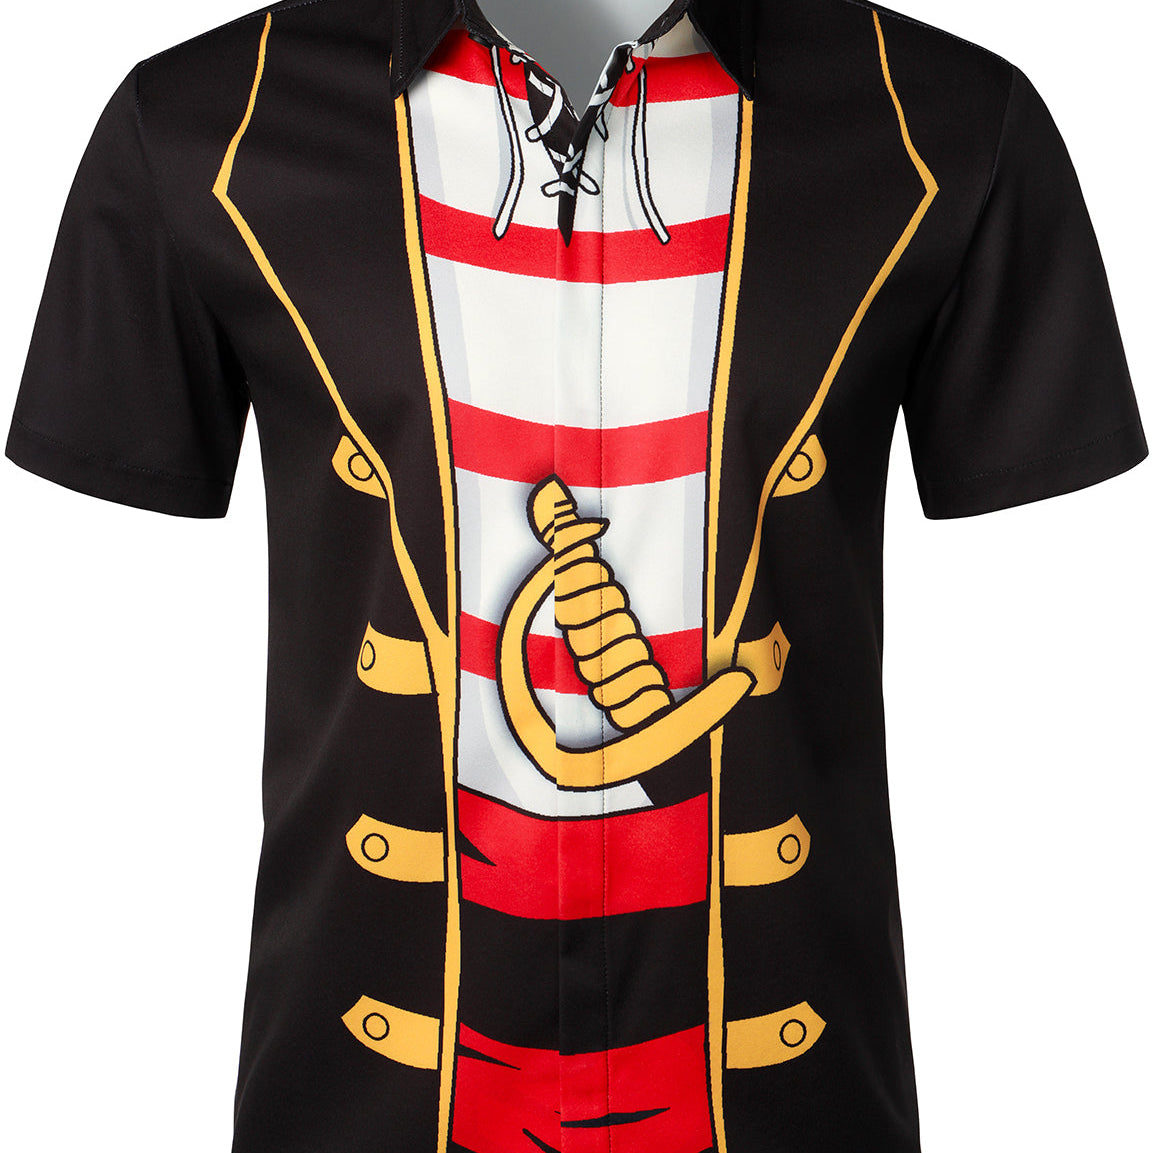 Chemise à manches courtes pour homme Pirate Graphic Costume Art Black Halloween Costume Party